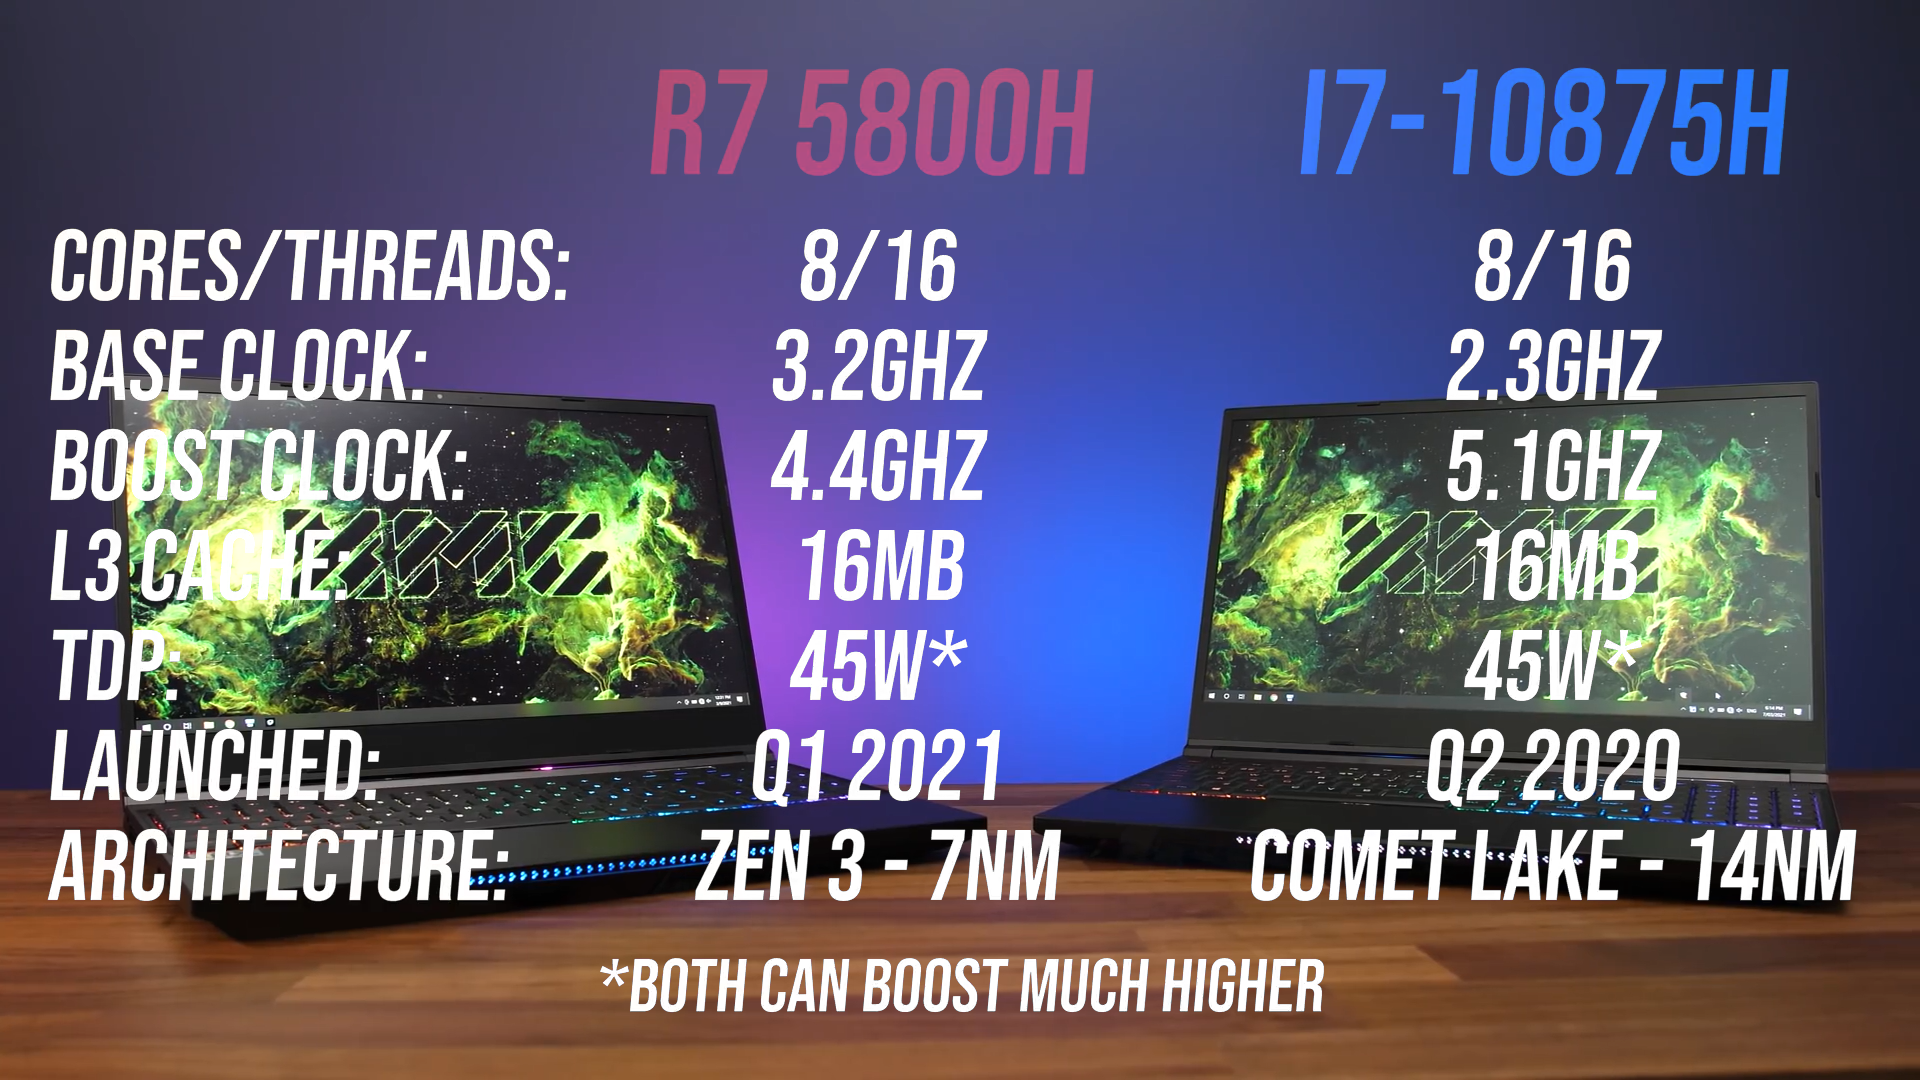 Asus vivobook amd ryzen 7 5800h. Ryzen 7 5800h. Ноутбук AMD Ryzen 7 5800h. AMD Ryzen 7 5800h характеристики. Intel Core i7 11390h vs Ryzen 7 5800h.